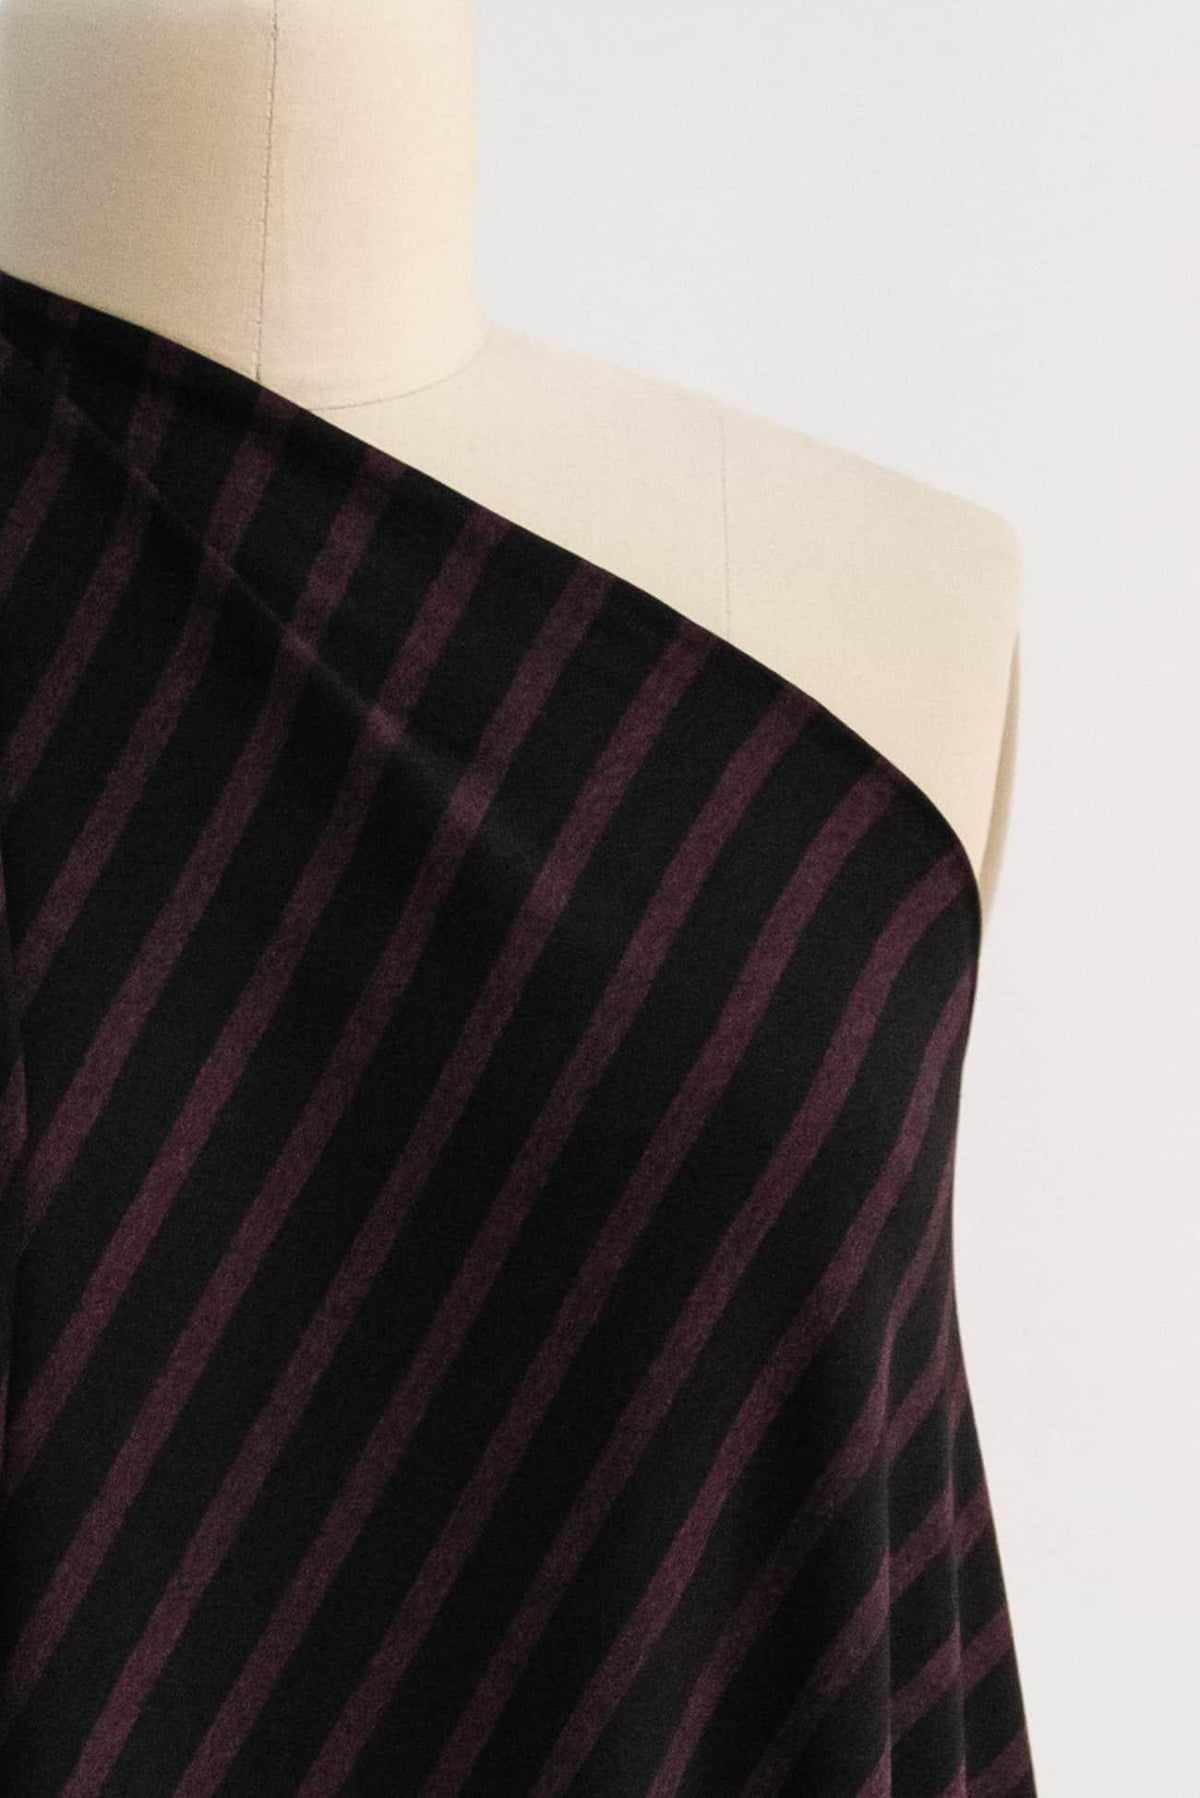 Miles Davis Stripe USA Knit - Marcy Tilton Fabrics